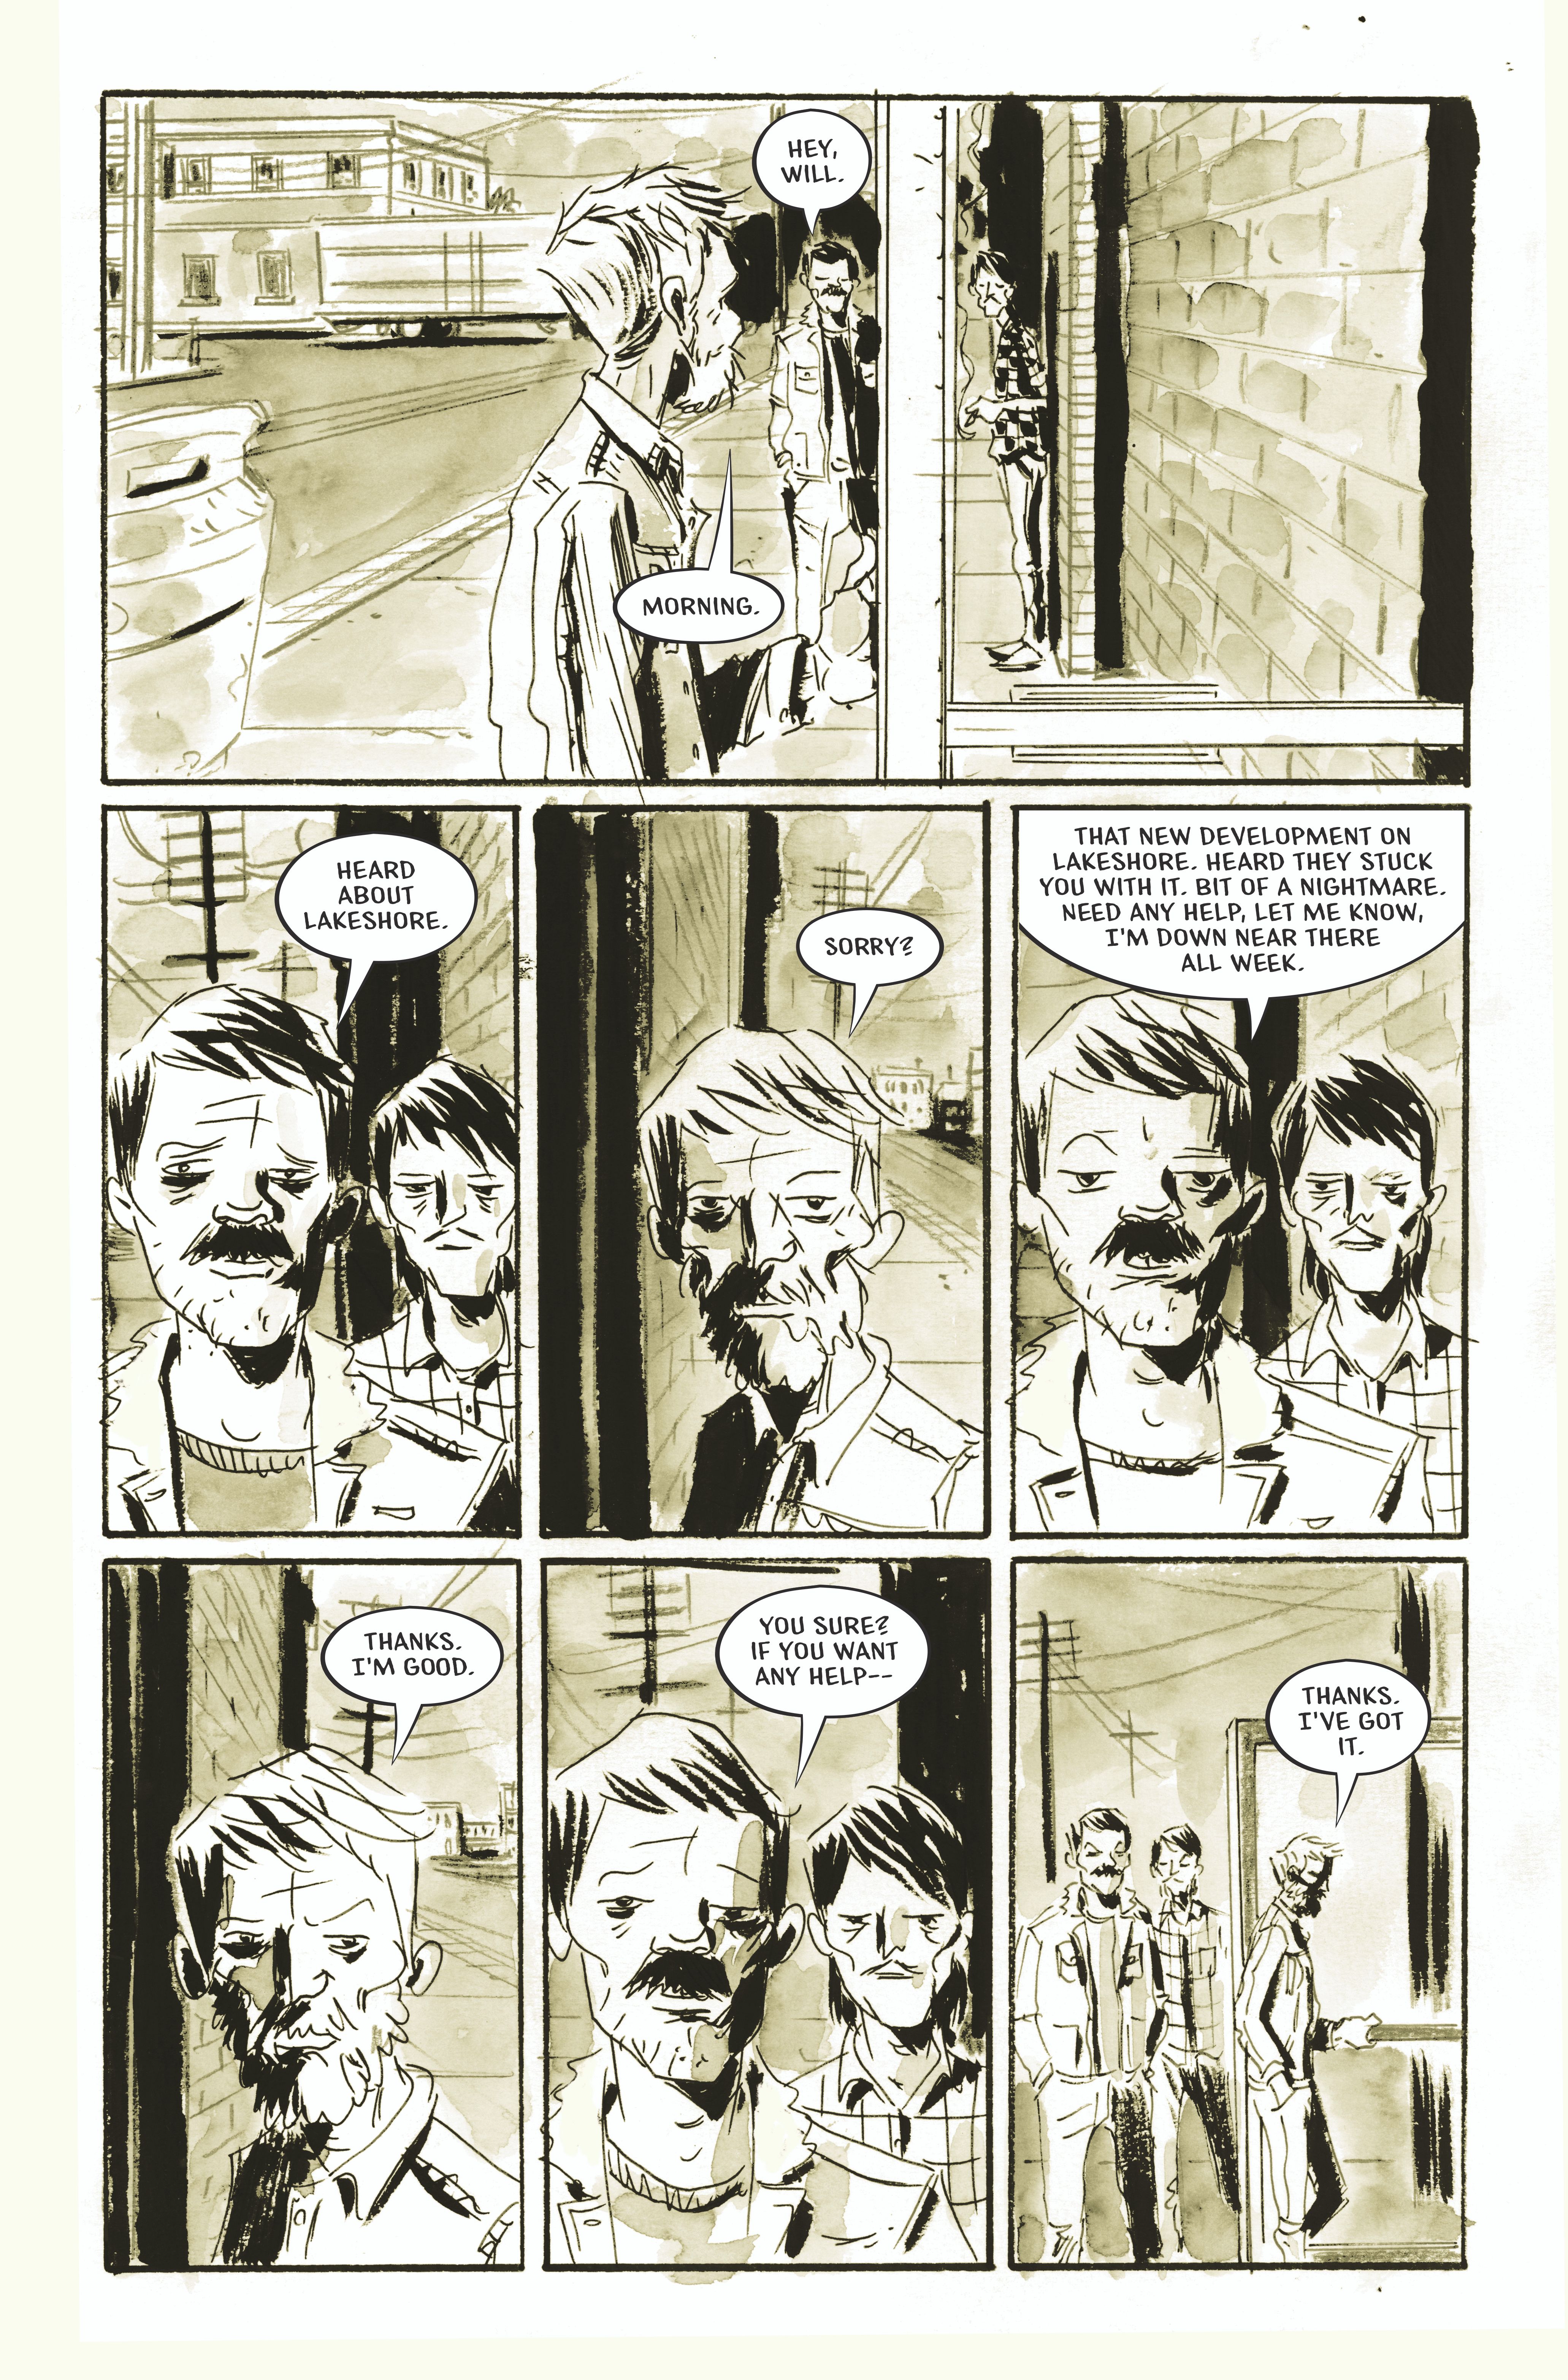 Preview of Jeff Lemire's Mazebook from Dark Horse Comics